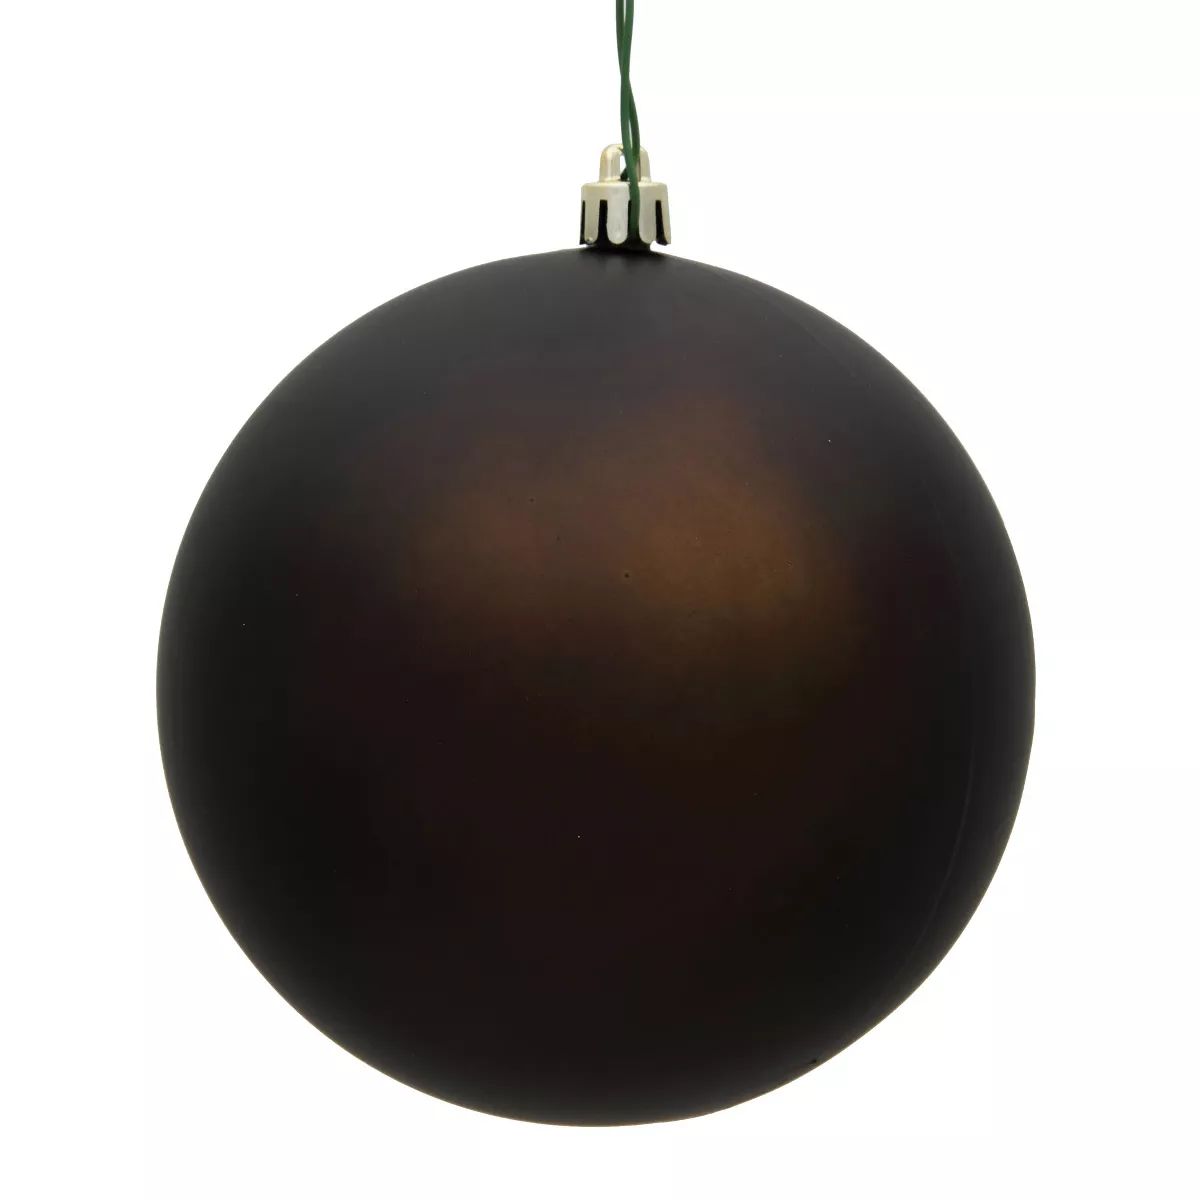 Vickerman Chocolate Ball Ornament | Target